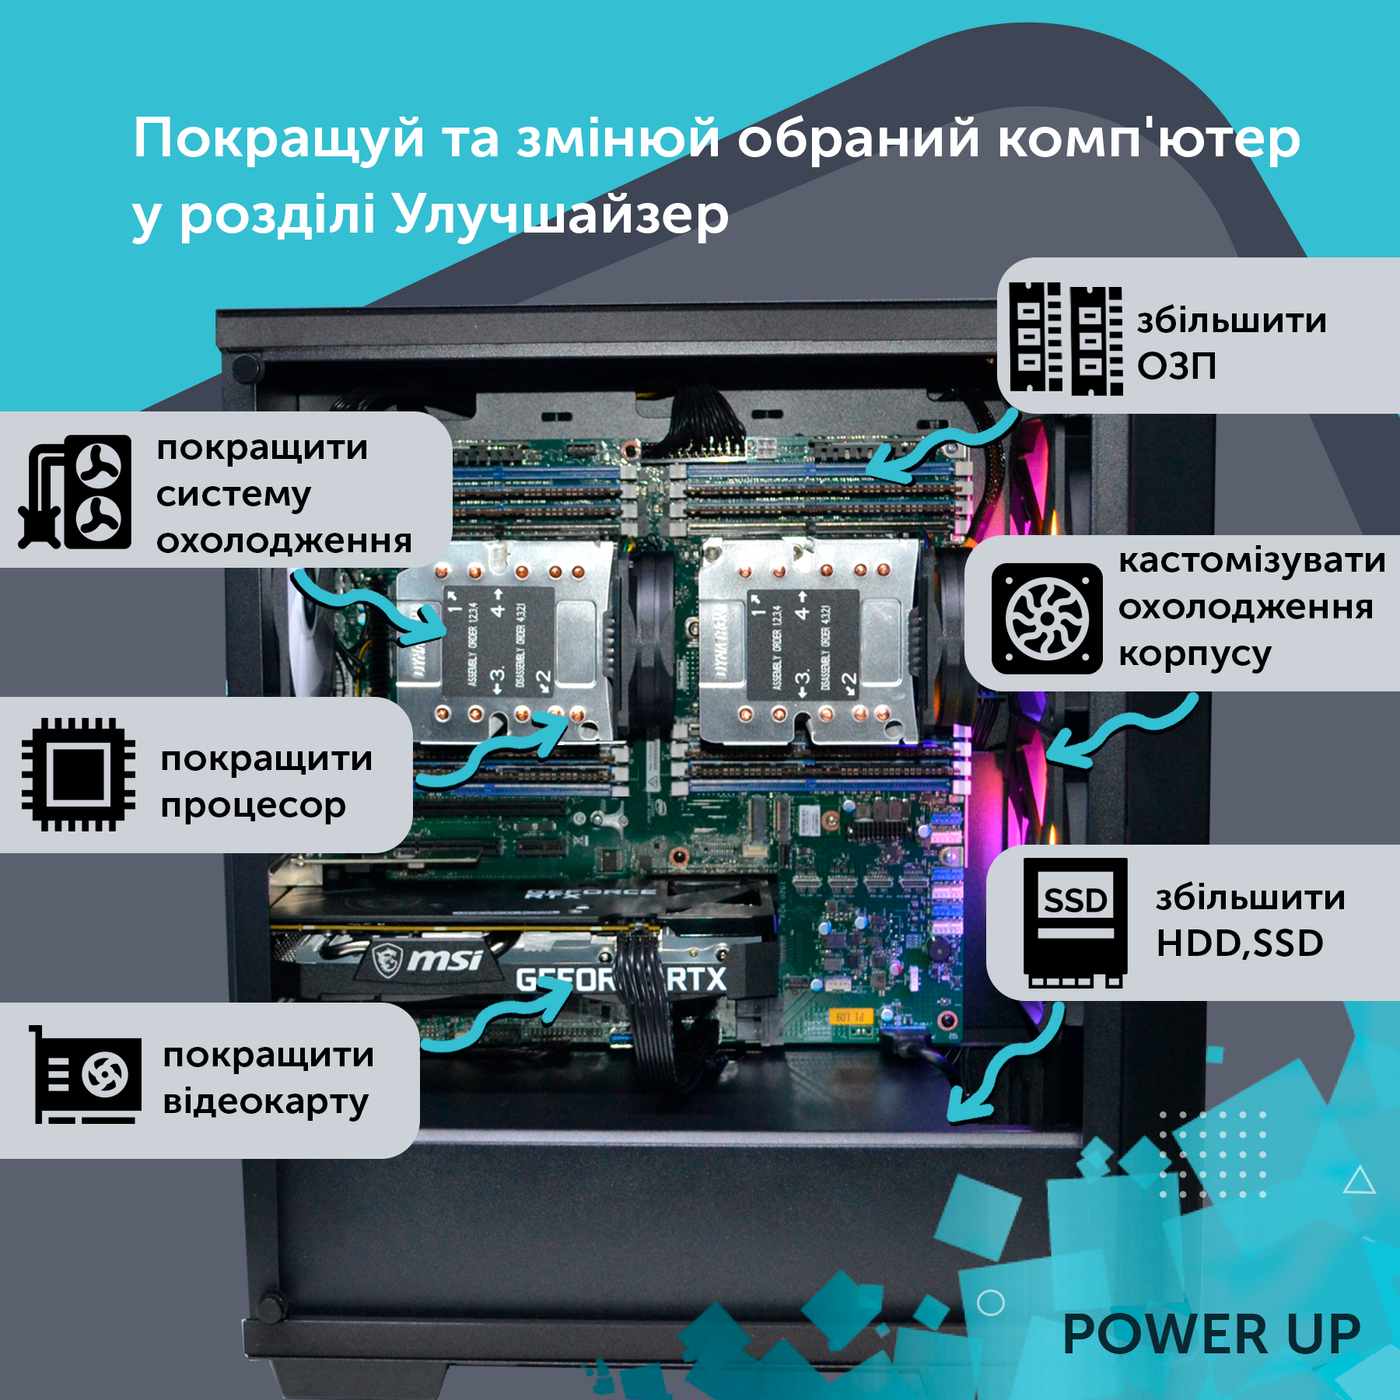 Рабочая станция PowerUp #128 Xeon E5 2690 v3/32 GB/HDD 1 TB/SSD 256GB/NVIDIA Quadro RTX A4000 16GB